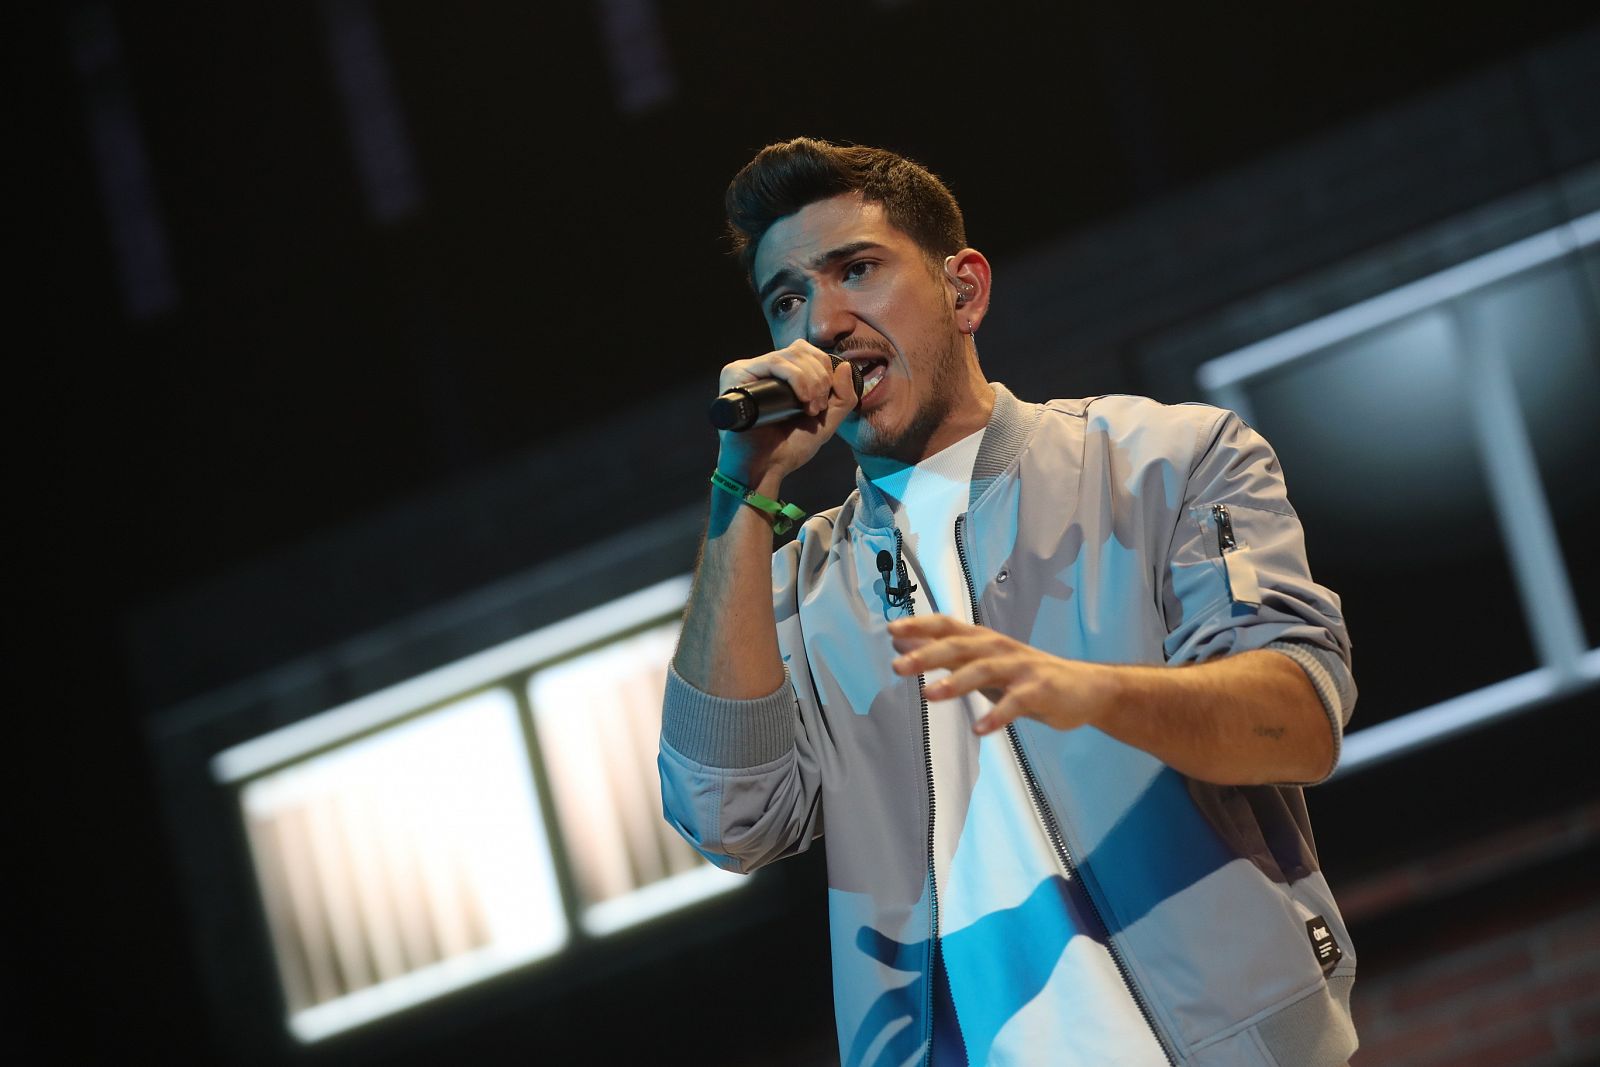 Bruno canta "Lately" en la gala 6 de OT 2020